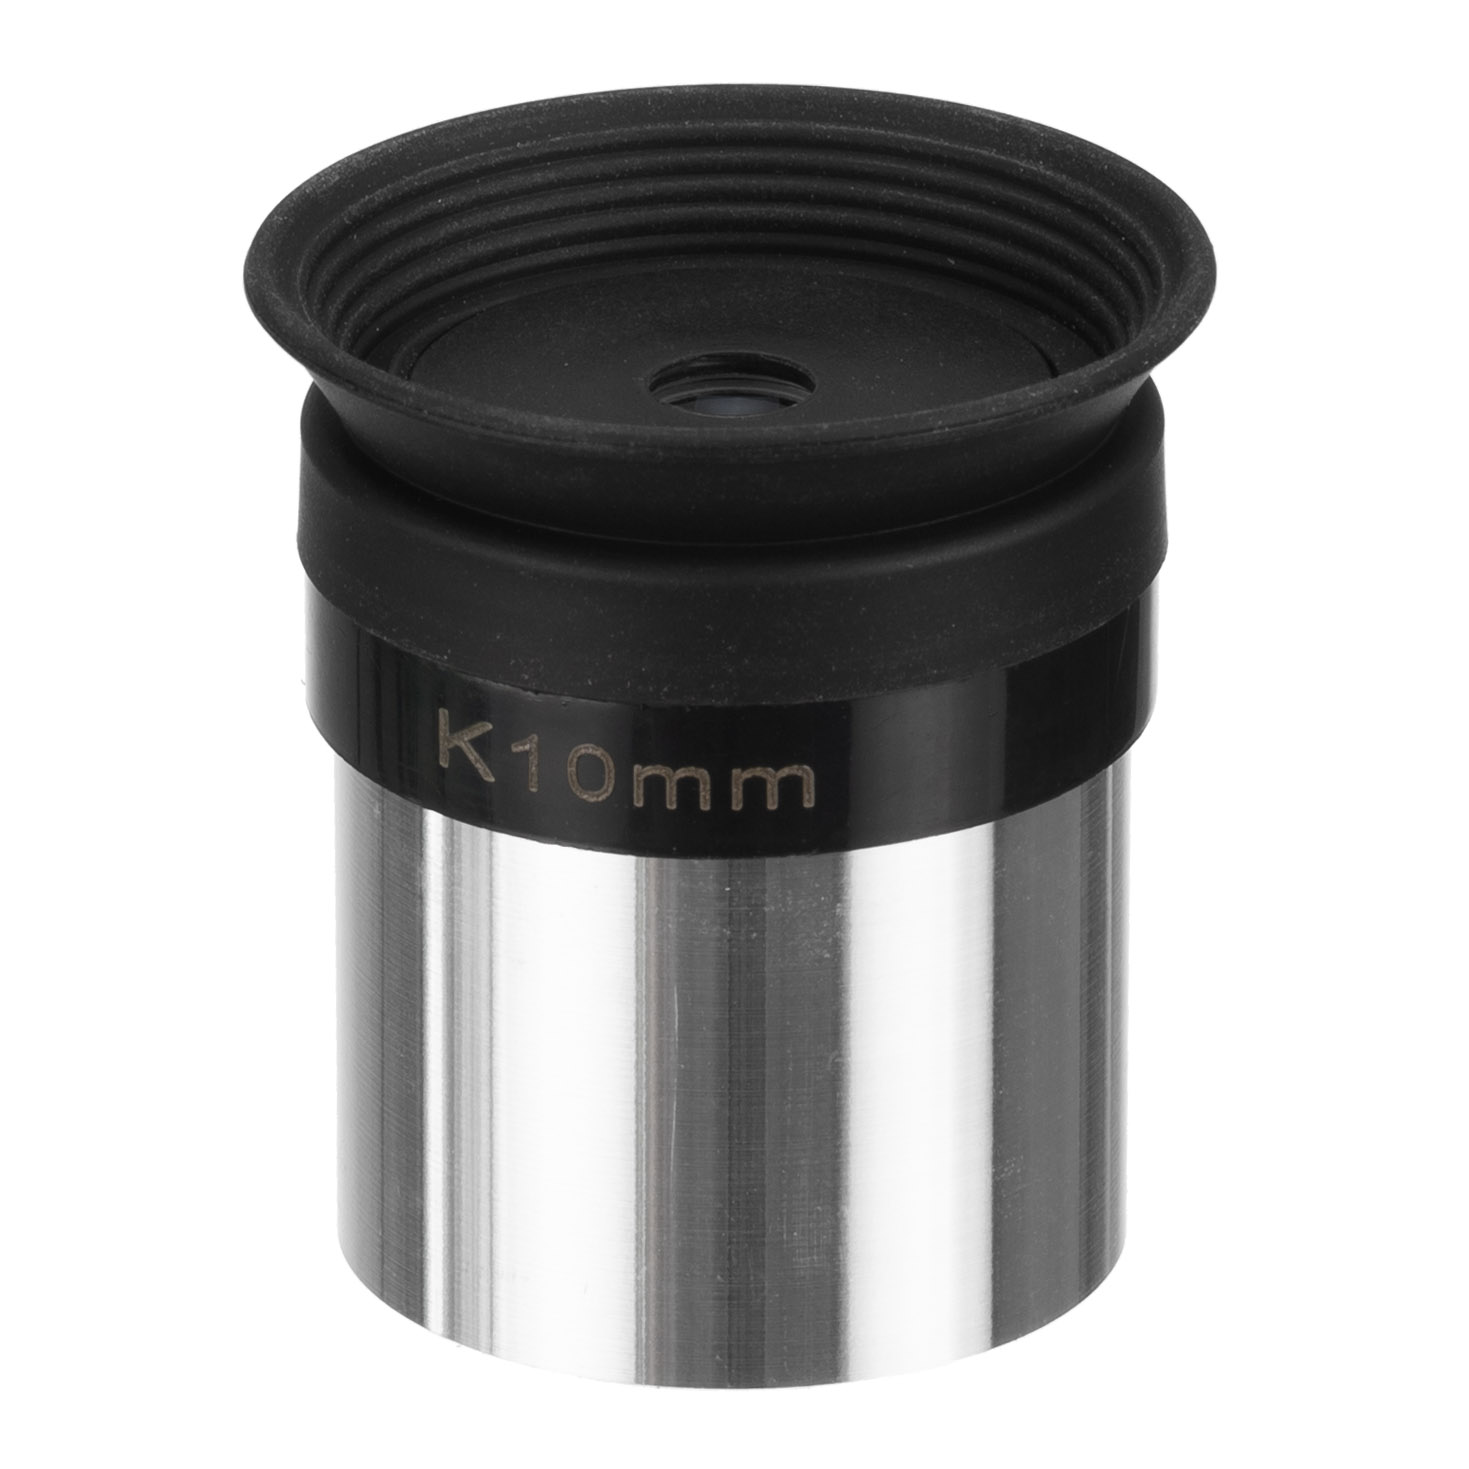 BRESSER Okular Kellner K10mm 1,25 Zoll mit Gummiaugenmuschel